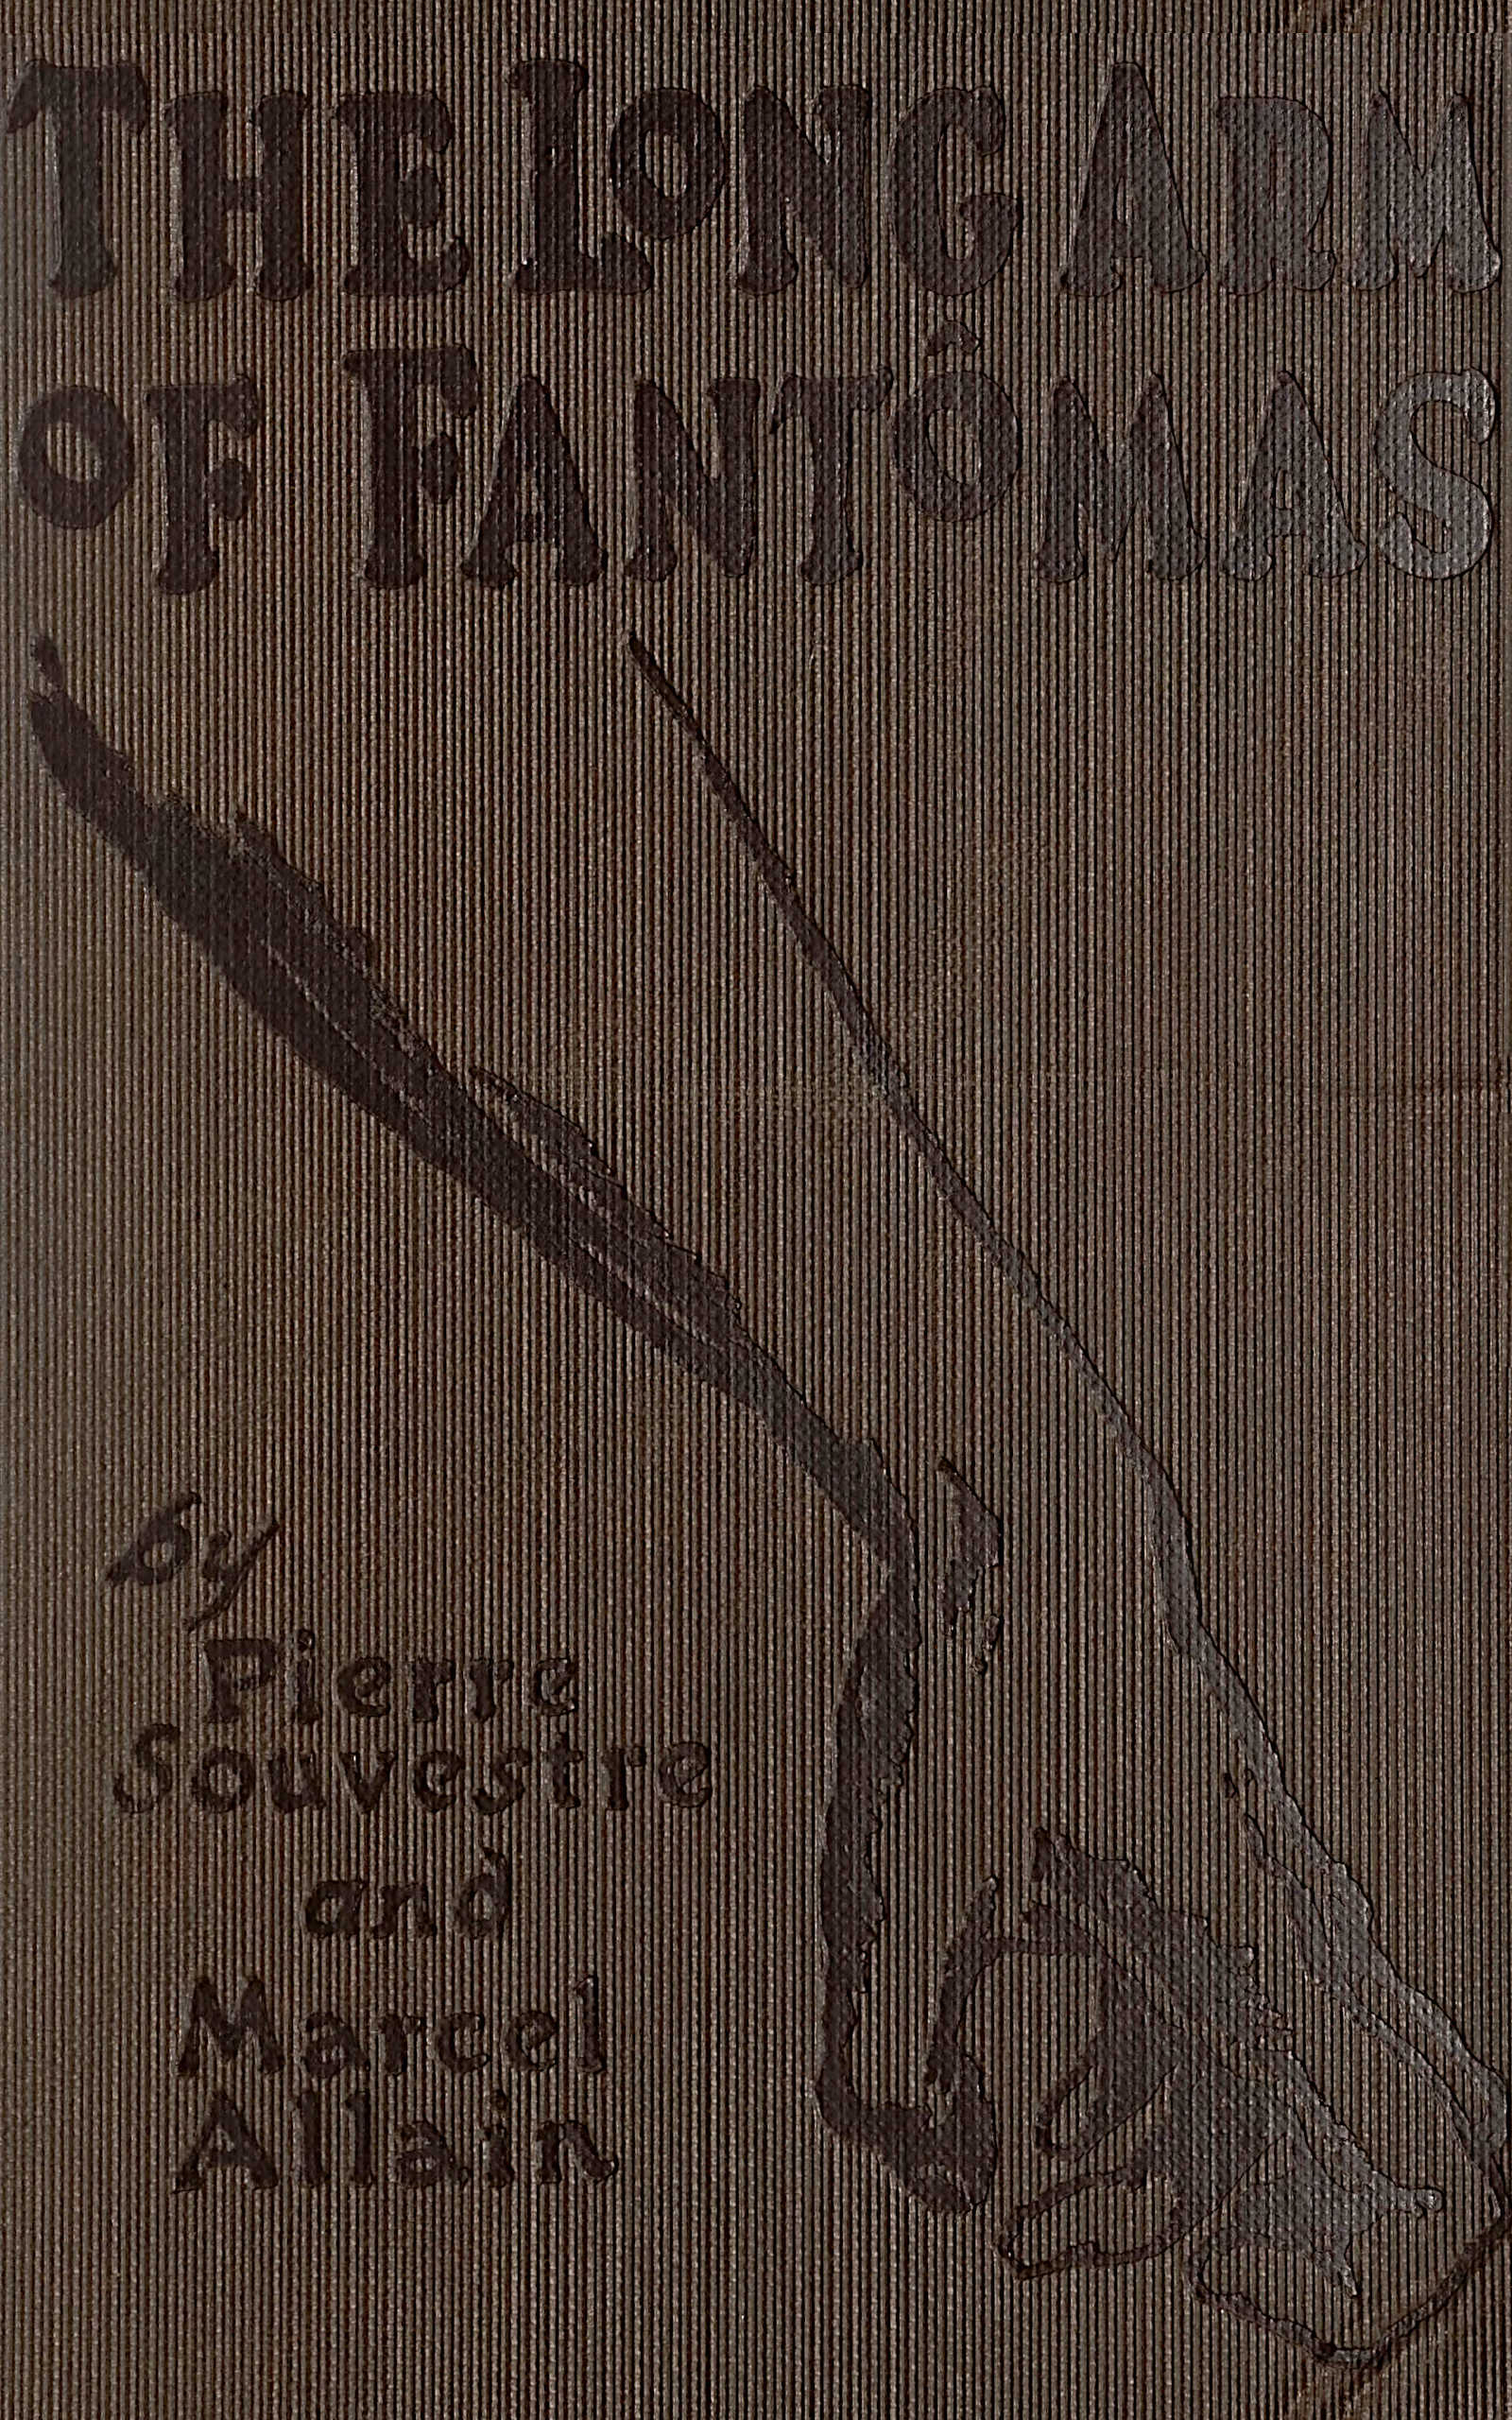 Fantômas'un Uzun Kolu